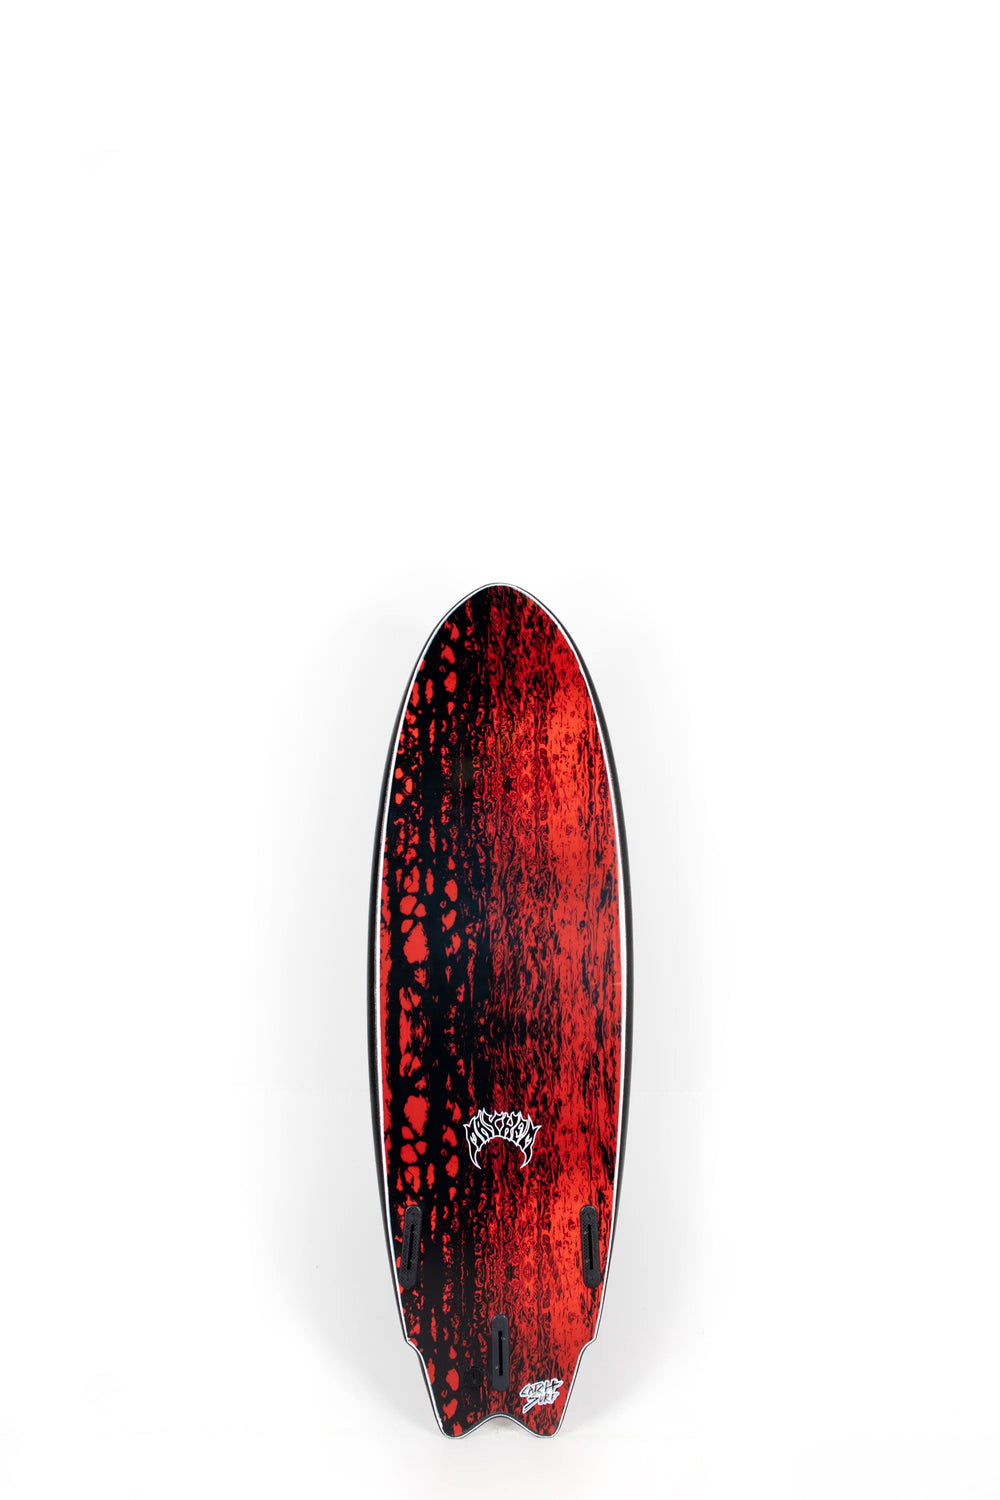 Pukas Surf Shop - Catch Surf - Odysea LOST RNF - 5'5